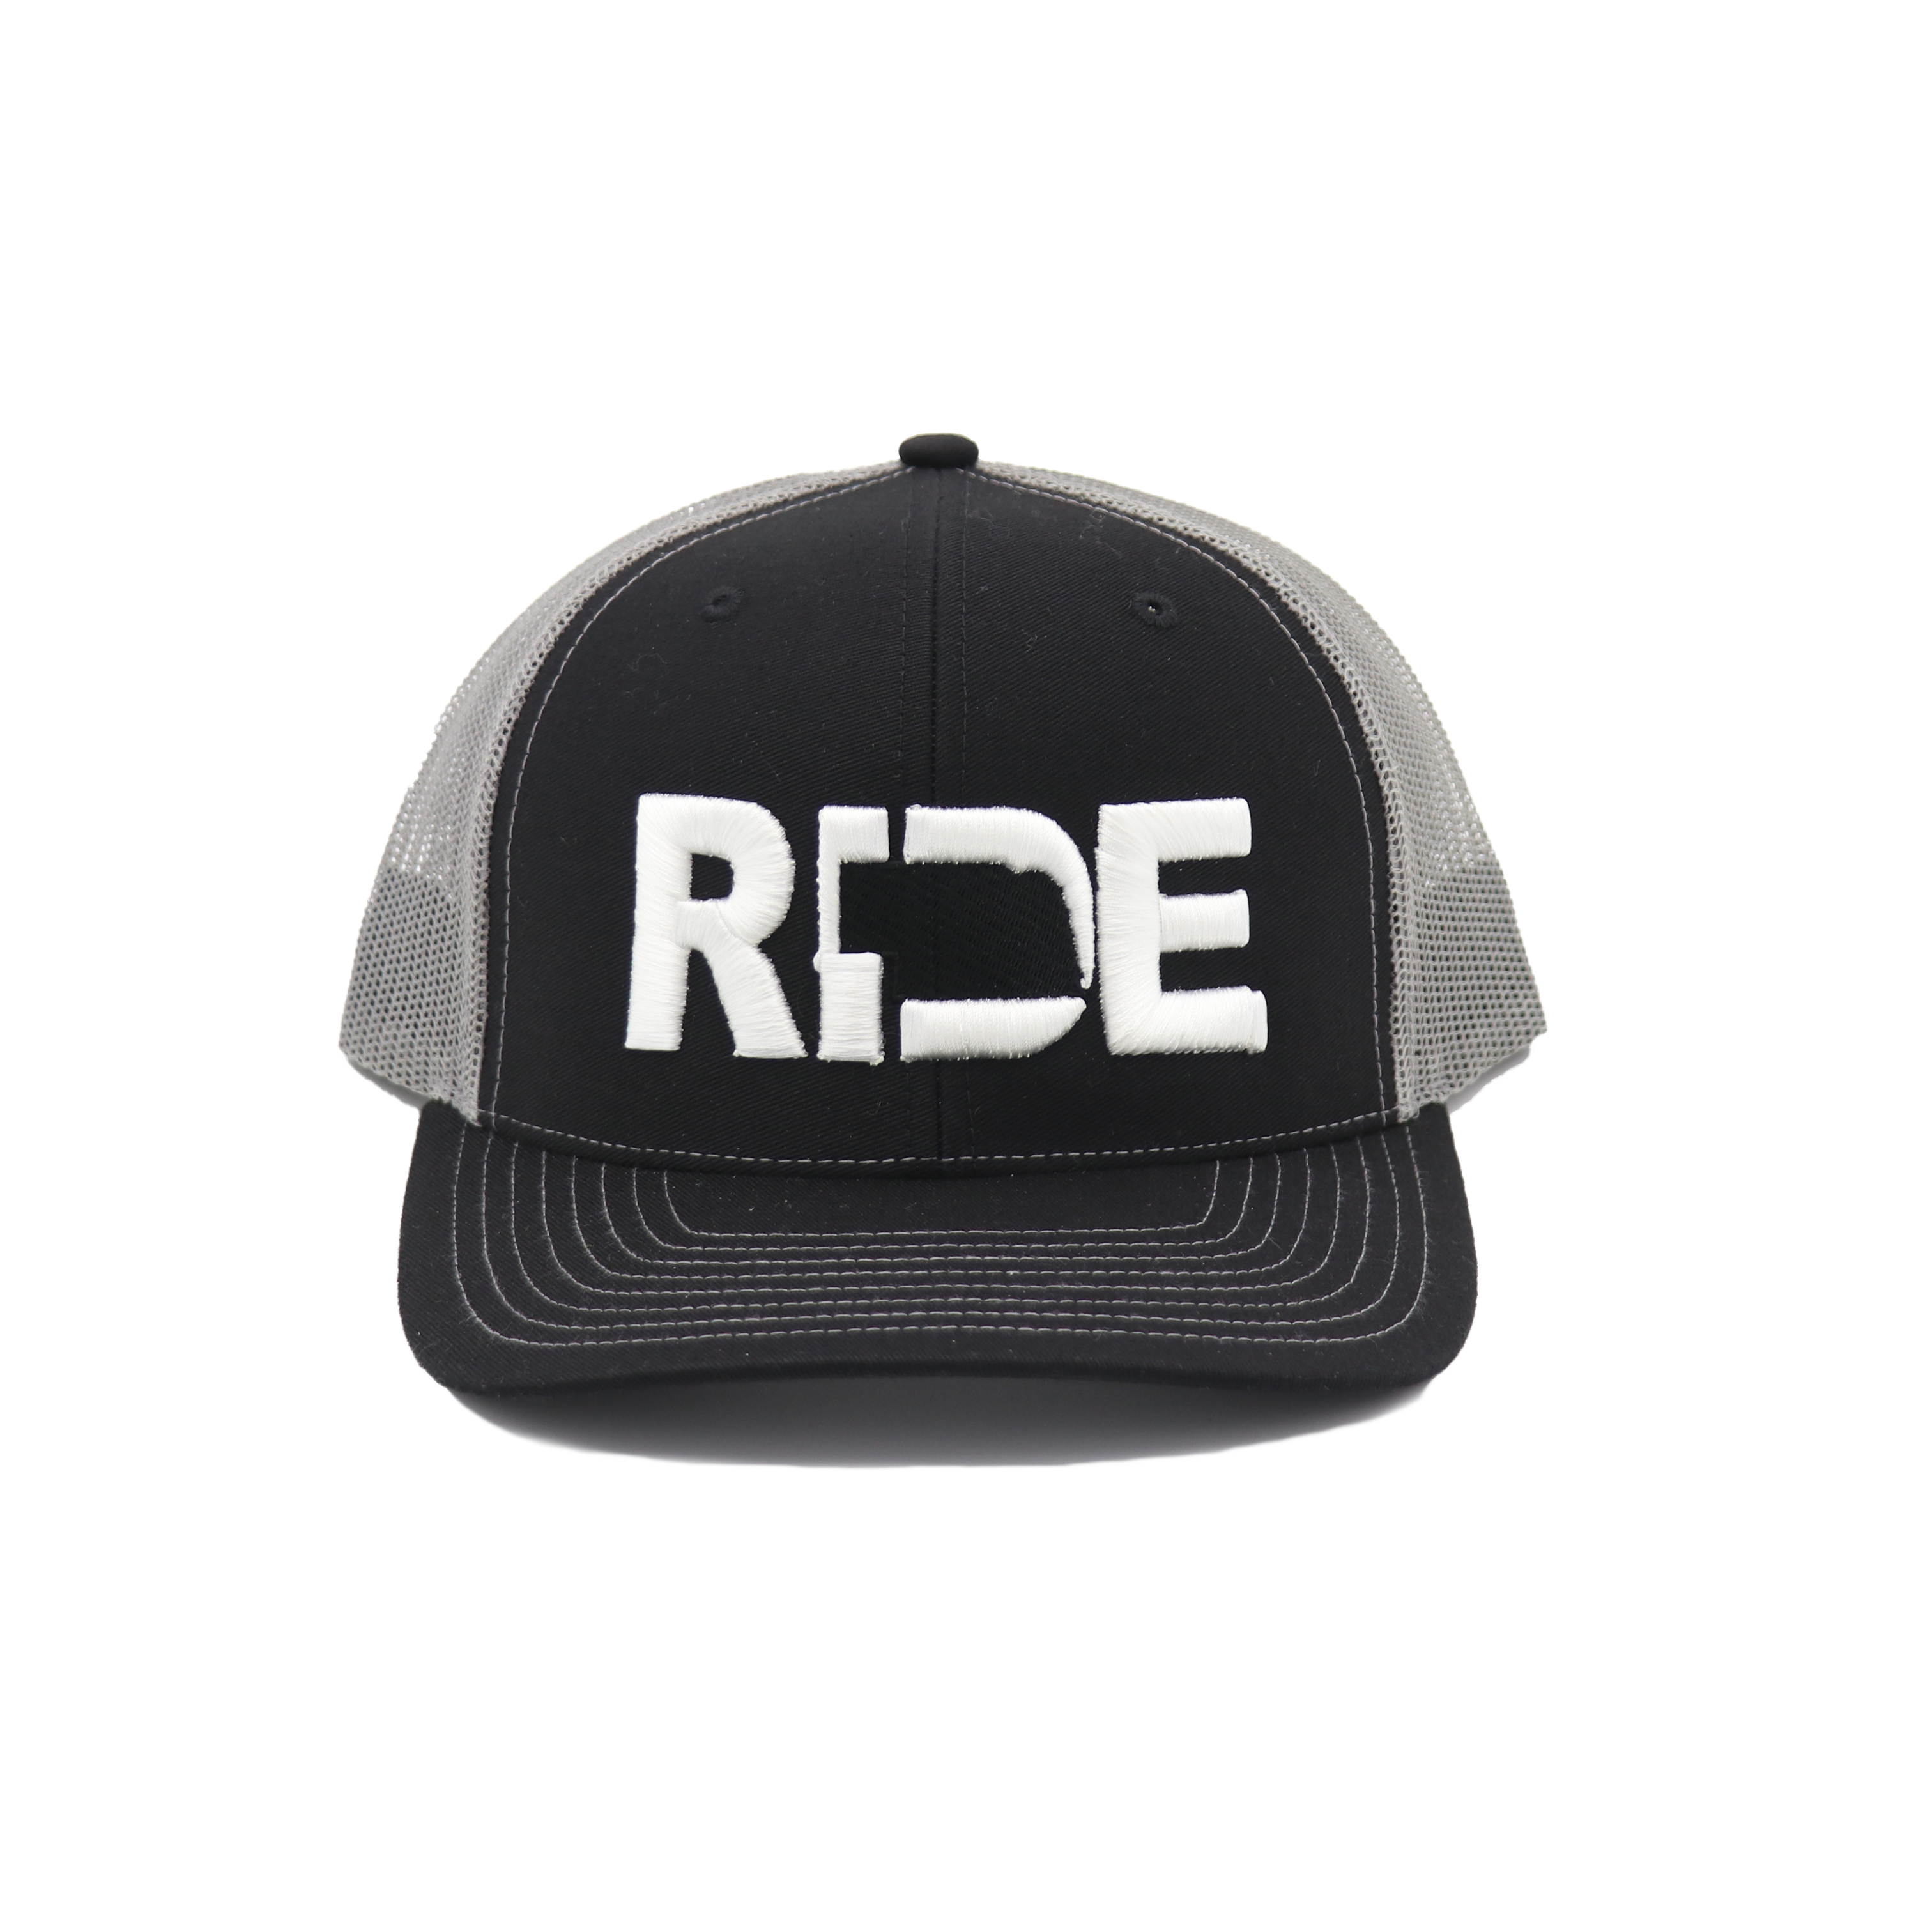 Ride Nebraska Classic Pro 3D Puff Embroidered Snapback Trucker Hat Black/Gray